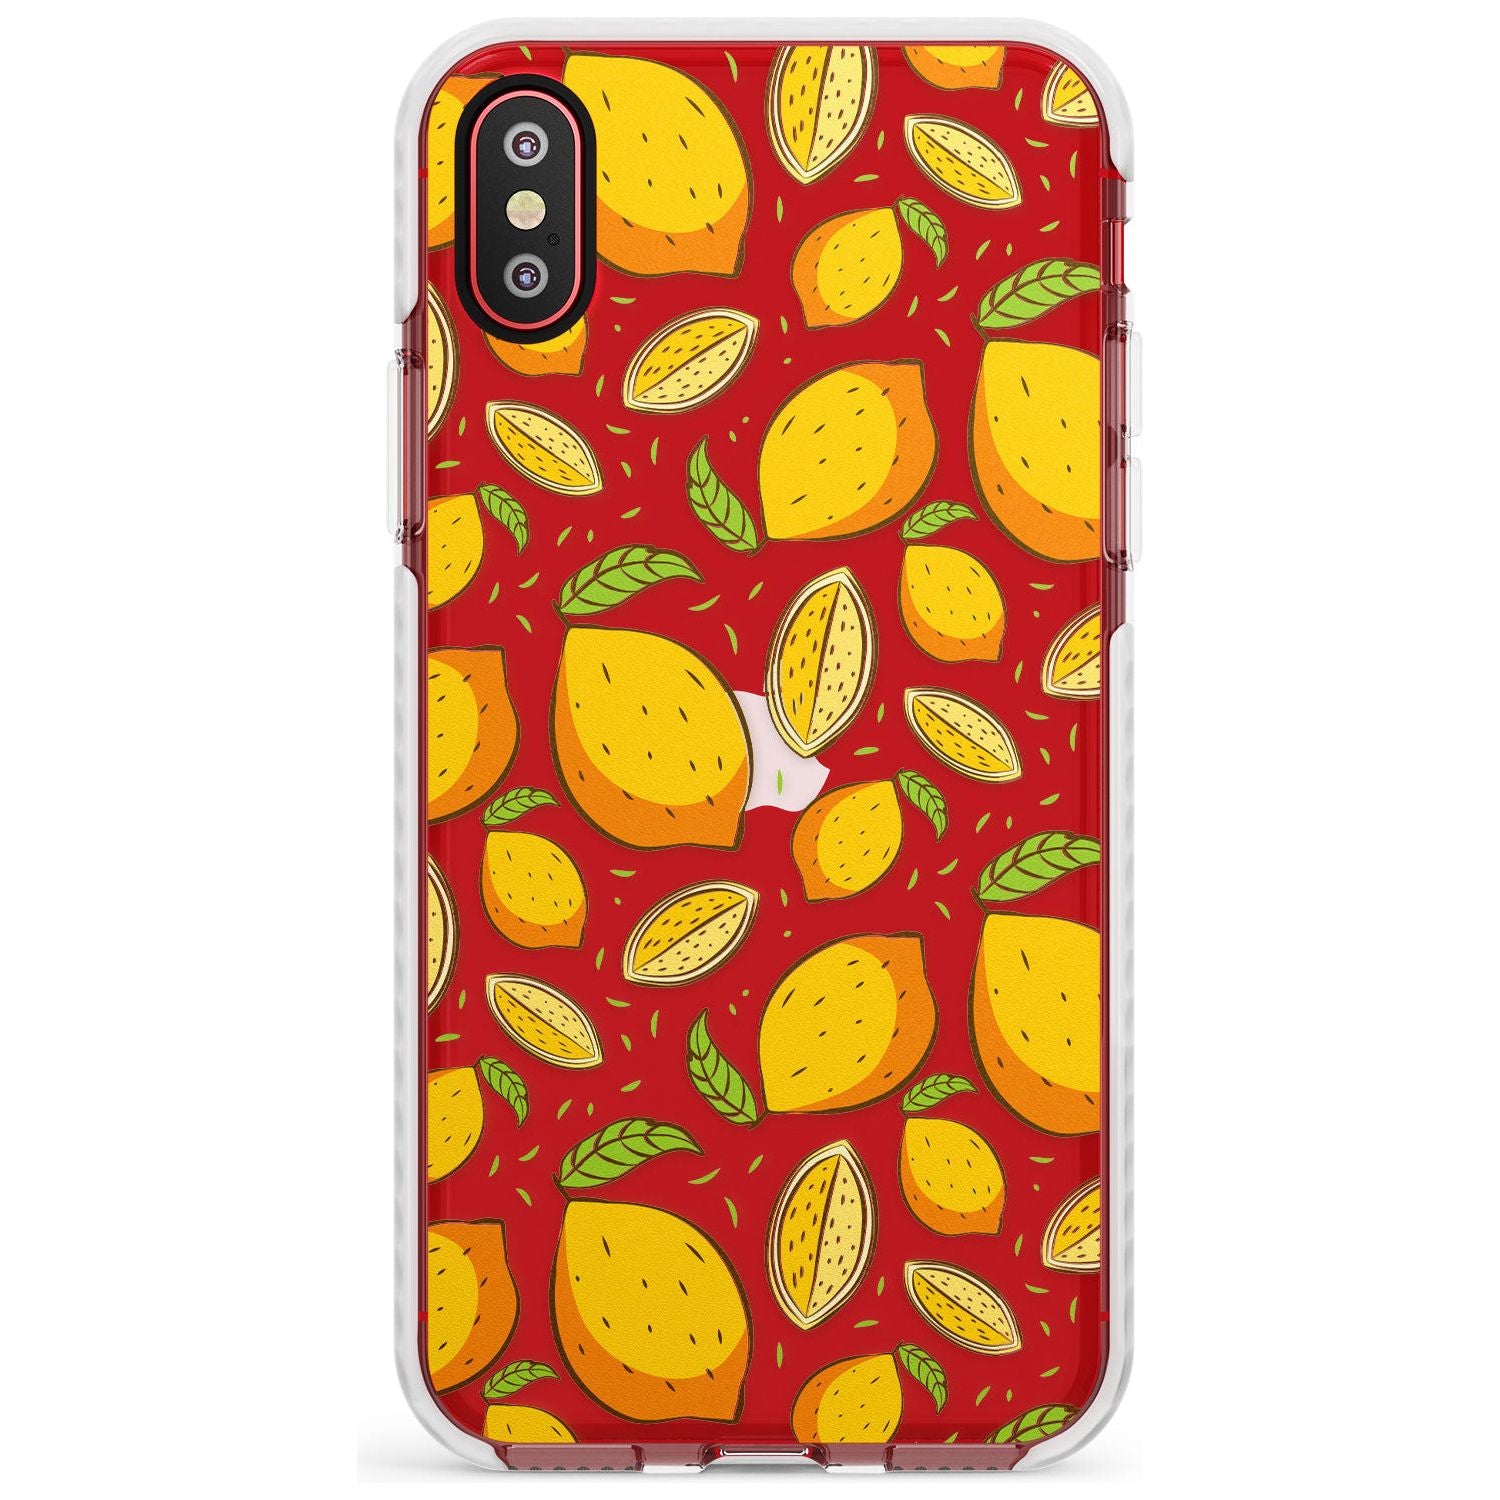 Lemon Pattern Impact Phone Case for iPhone X XS Max XR